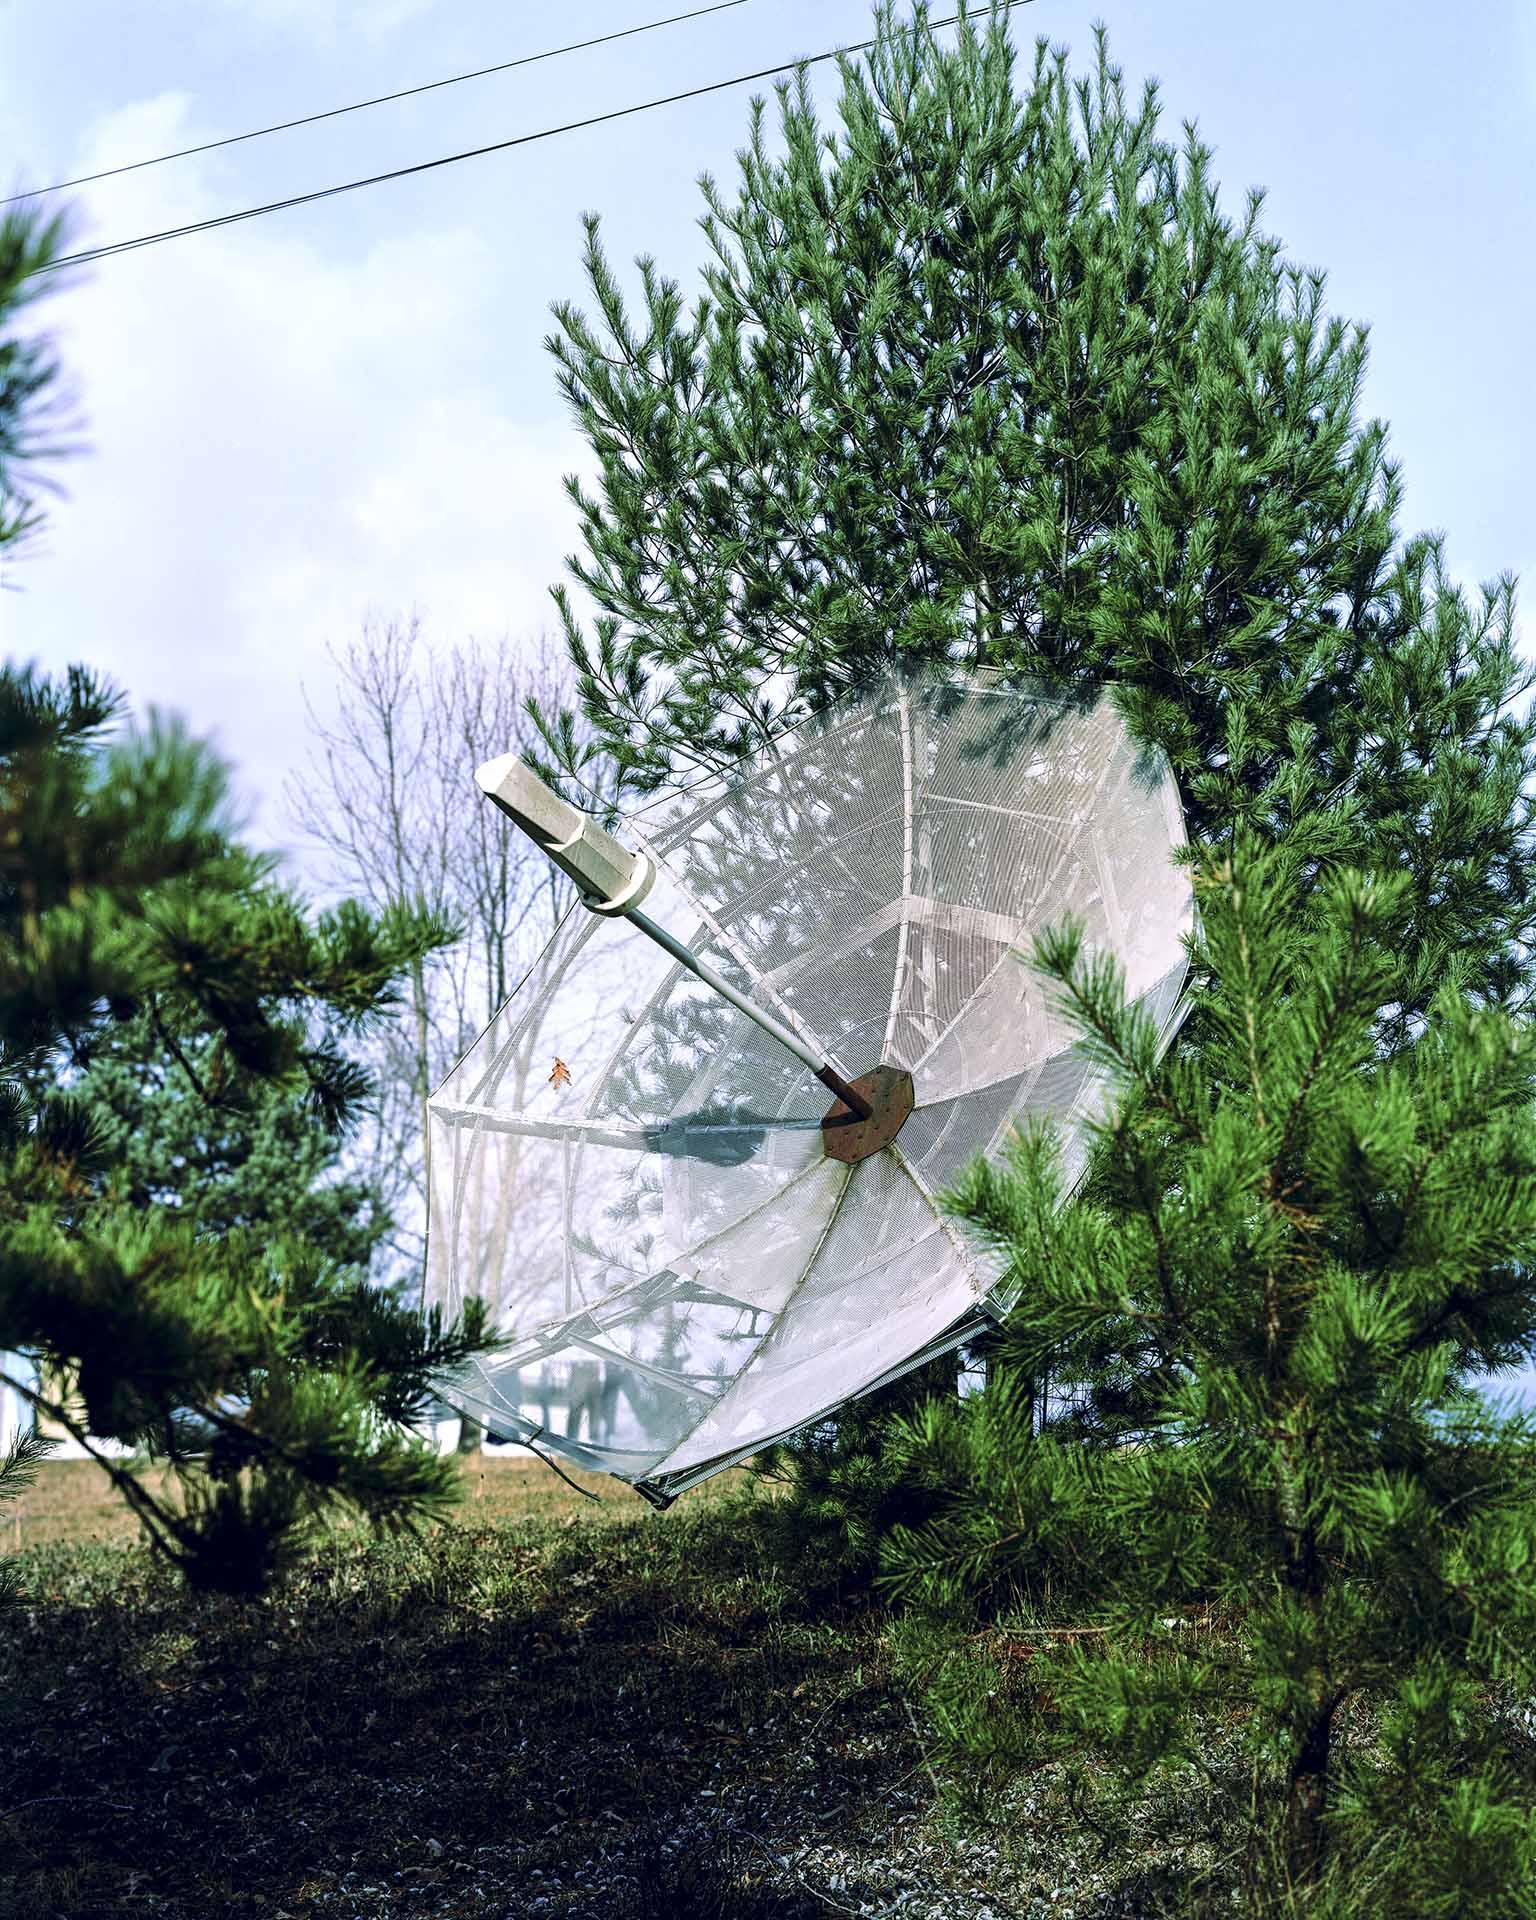 Satellite Dish - 
Xiangyun Chen